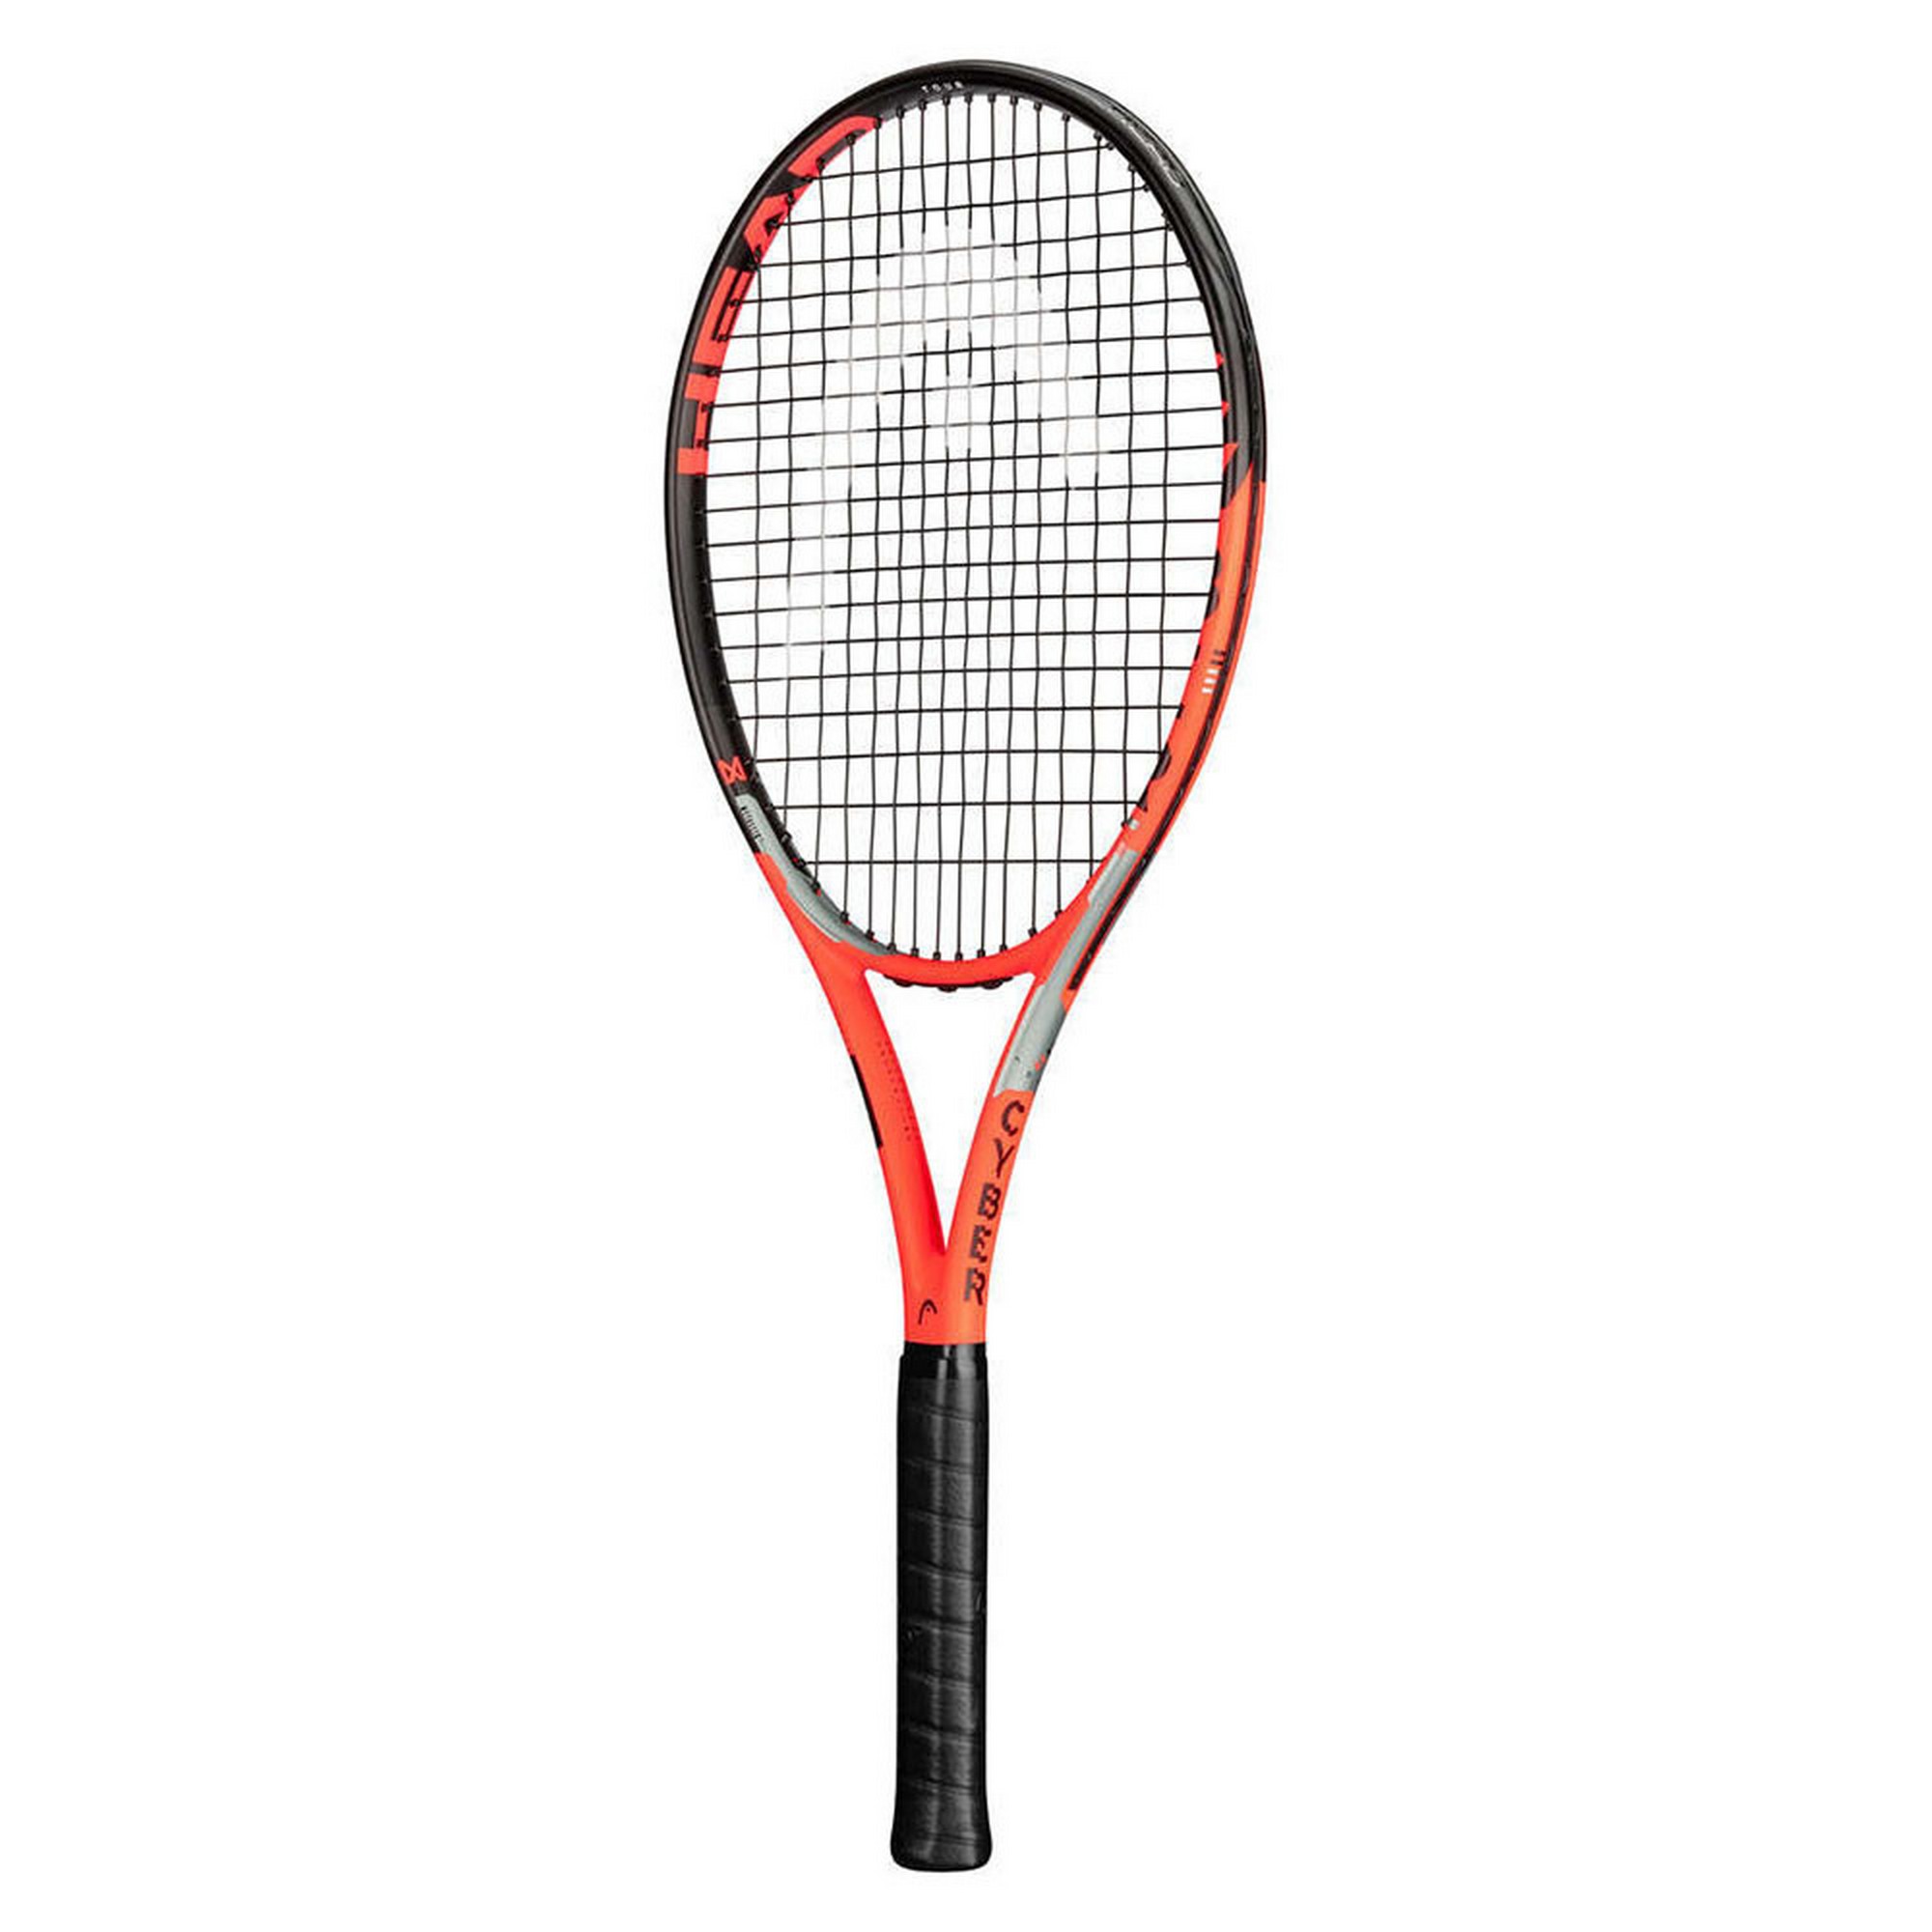 Ракетка для большого тенниса Head MX Cyber Tour Gr2 234401 оранжевый 2000_2000